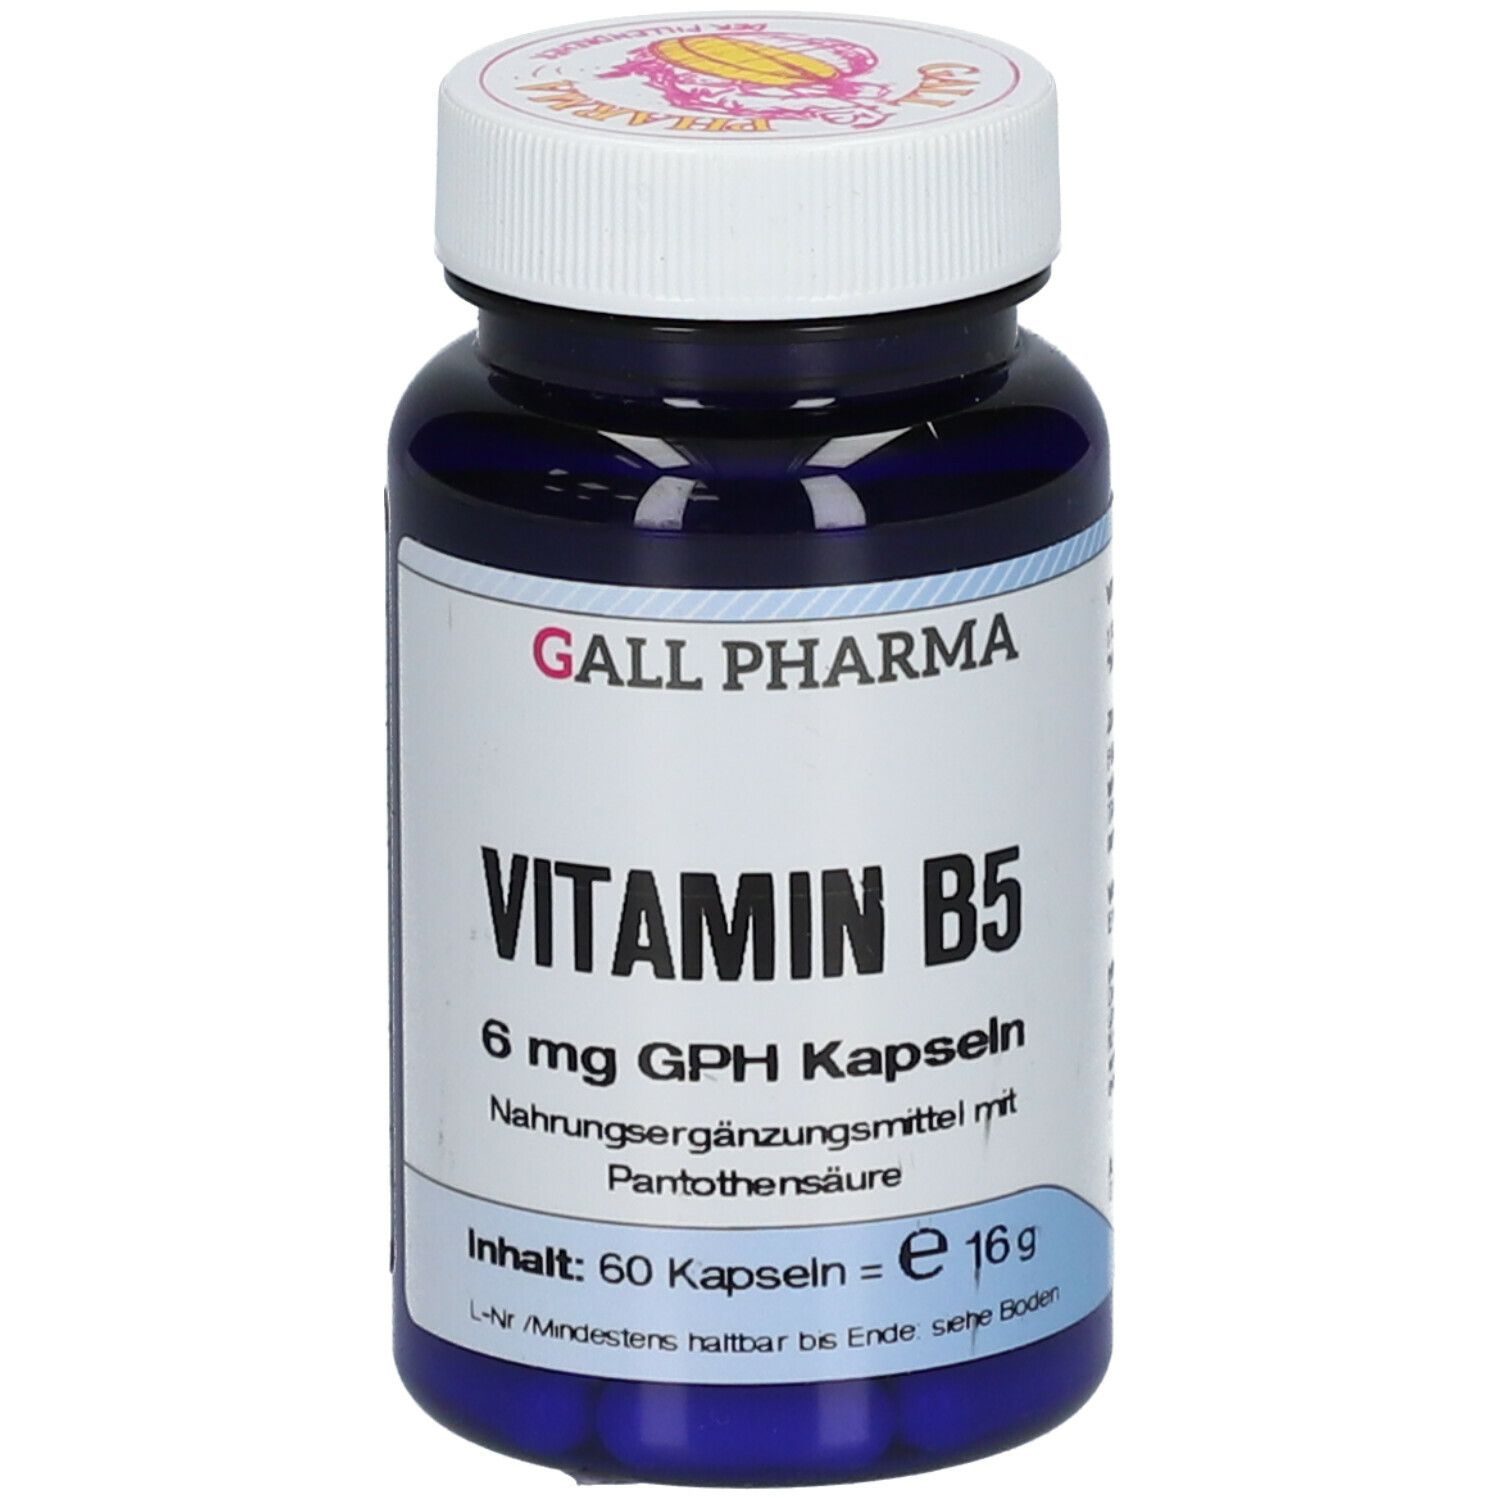 Image of GALL PHARMA Vitamin B5 6 mg GPH